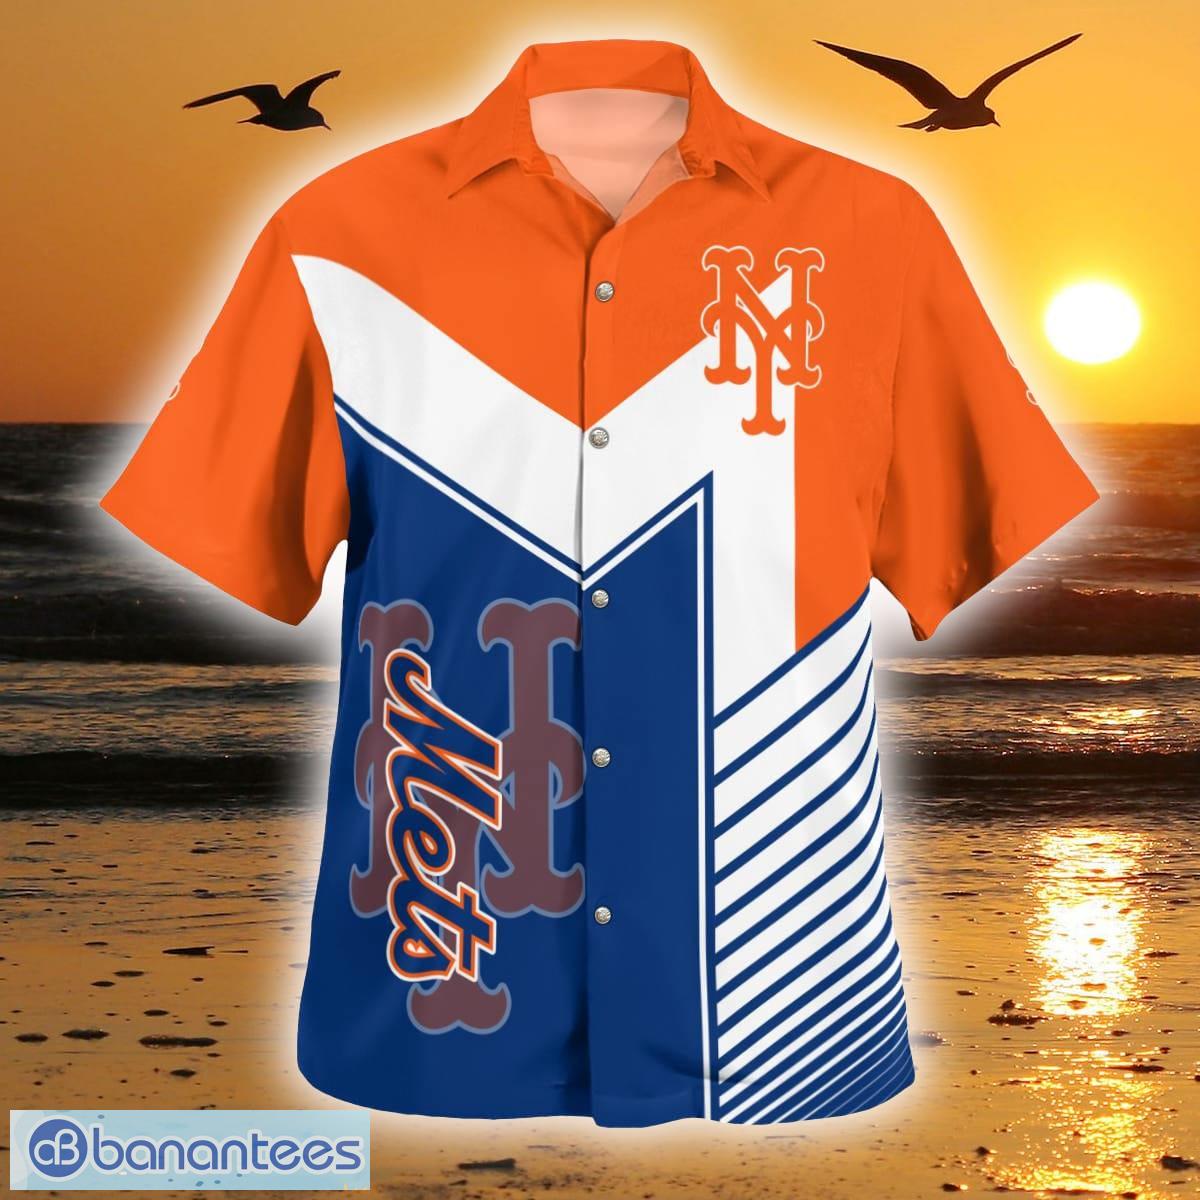 New York Mets Orange Hawaiian Shirt - Freedomdesign